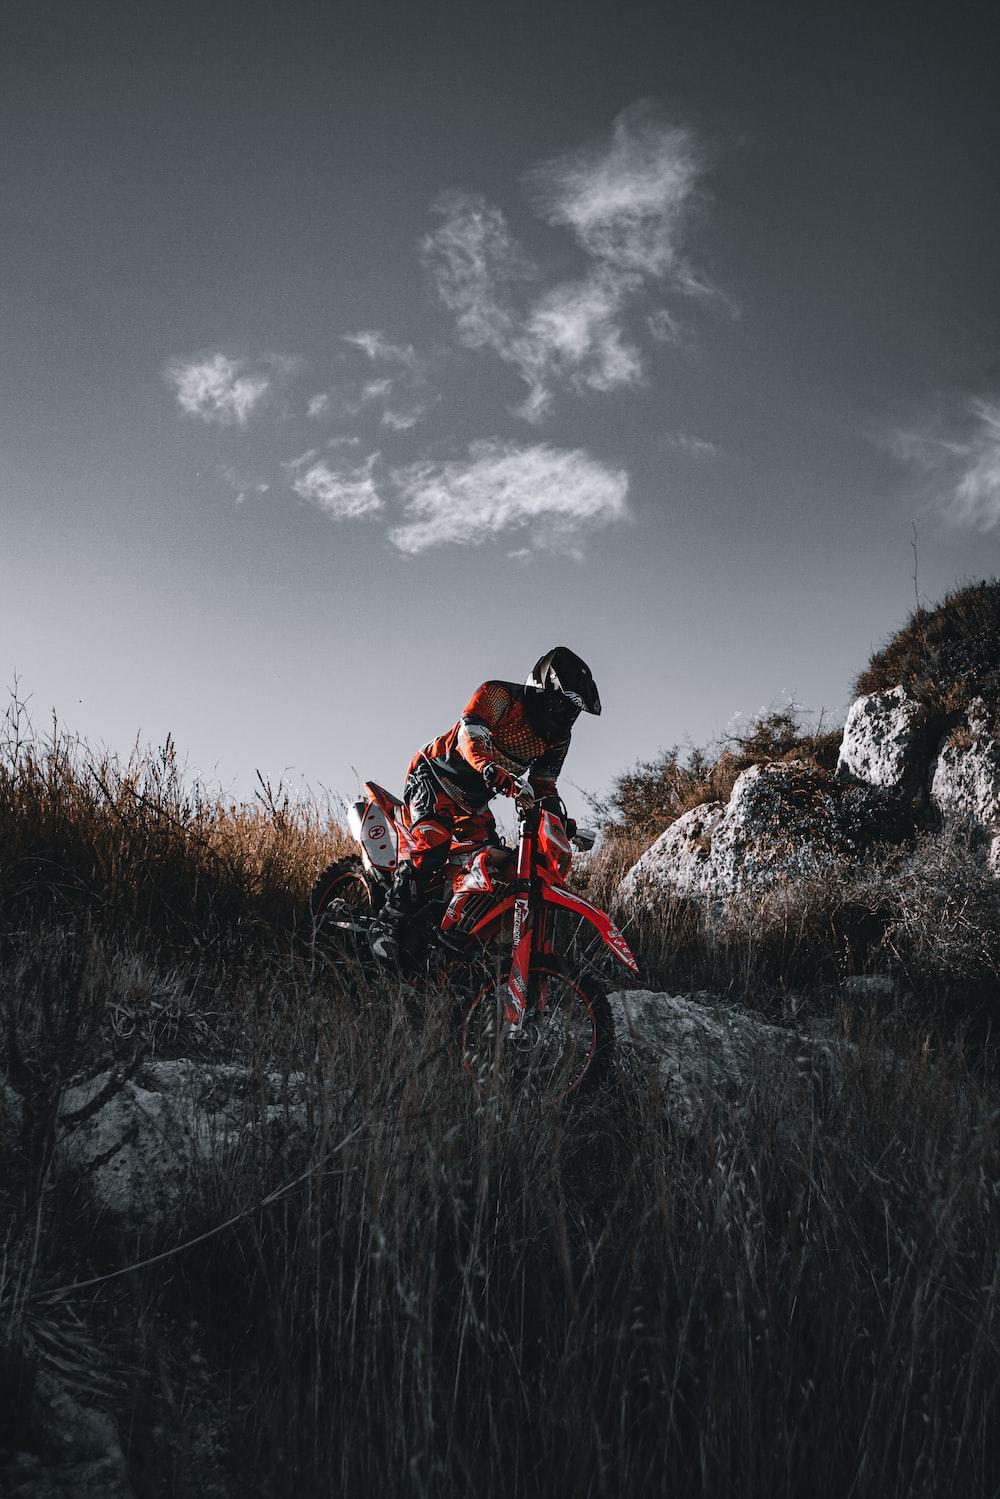 Man In Orange Jacket Riding On Red Dirt Bike Photo Italia